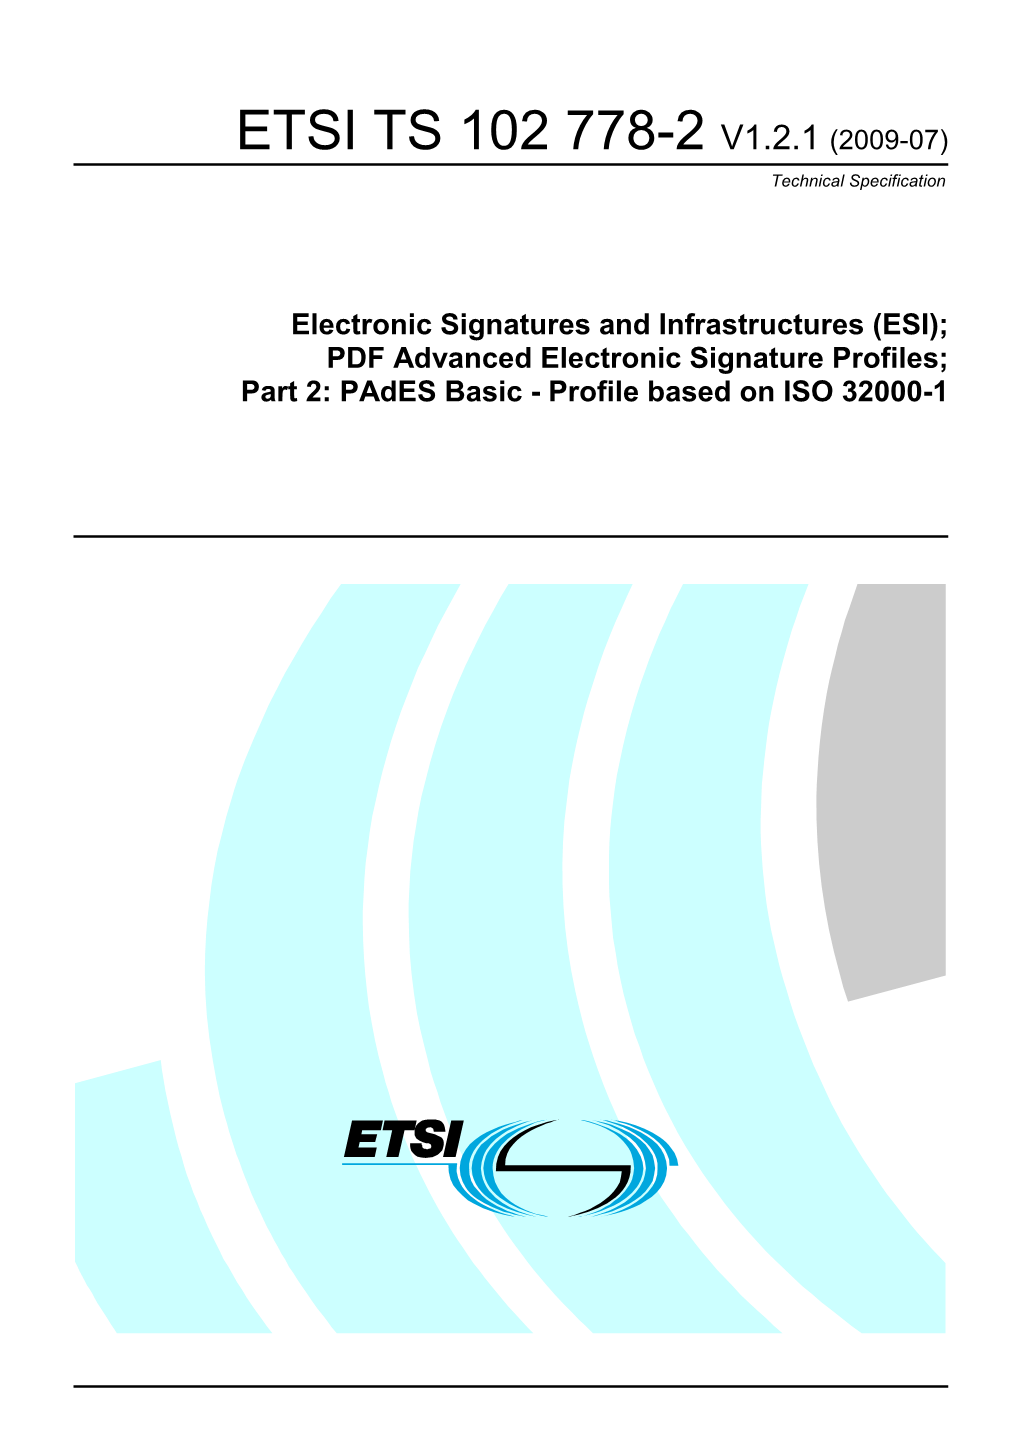 ETSI TS 102 778-2 V1.2.1 (2009-07) Technical Specification